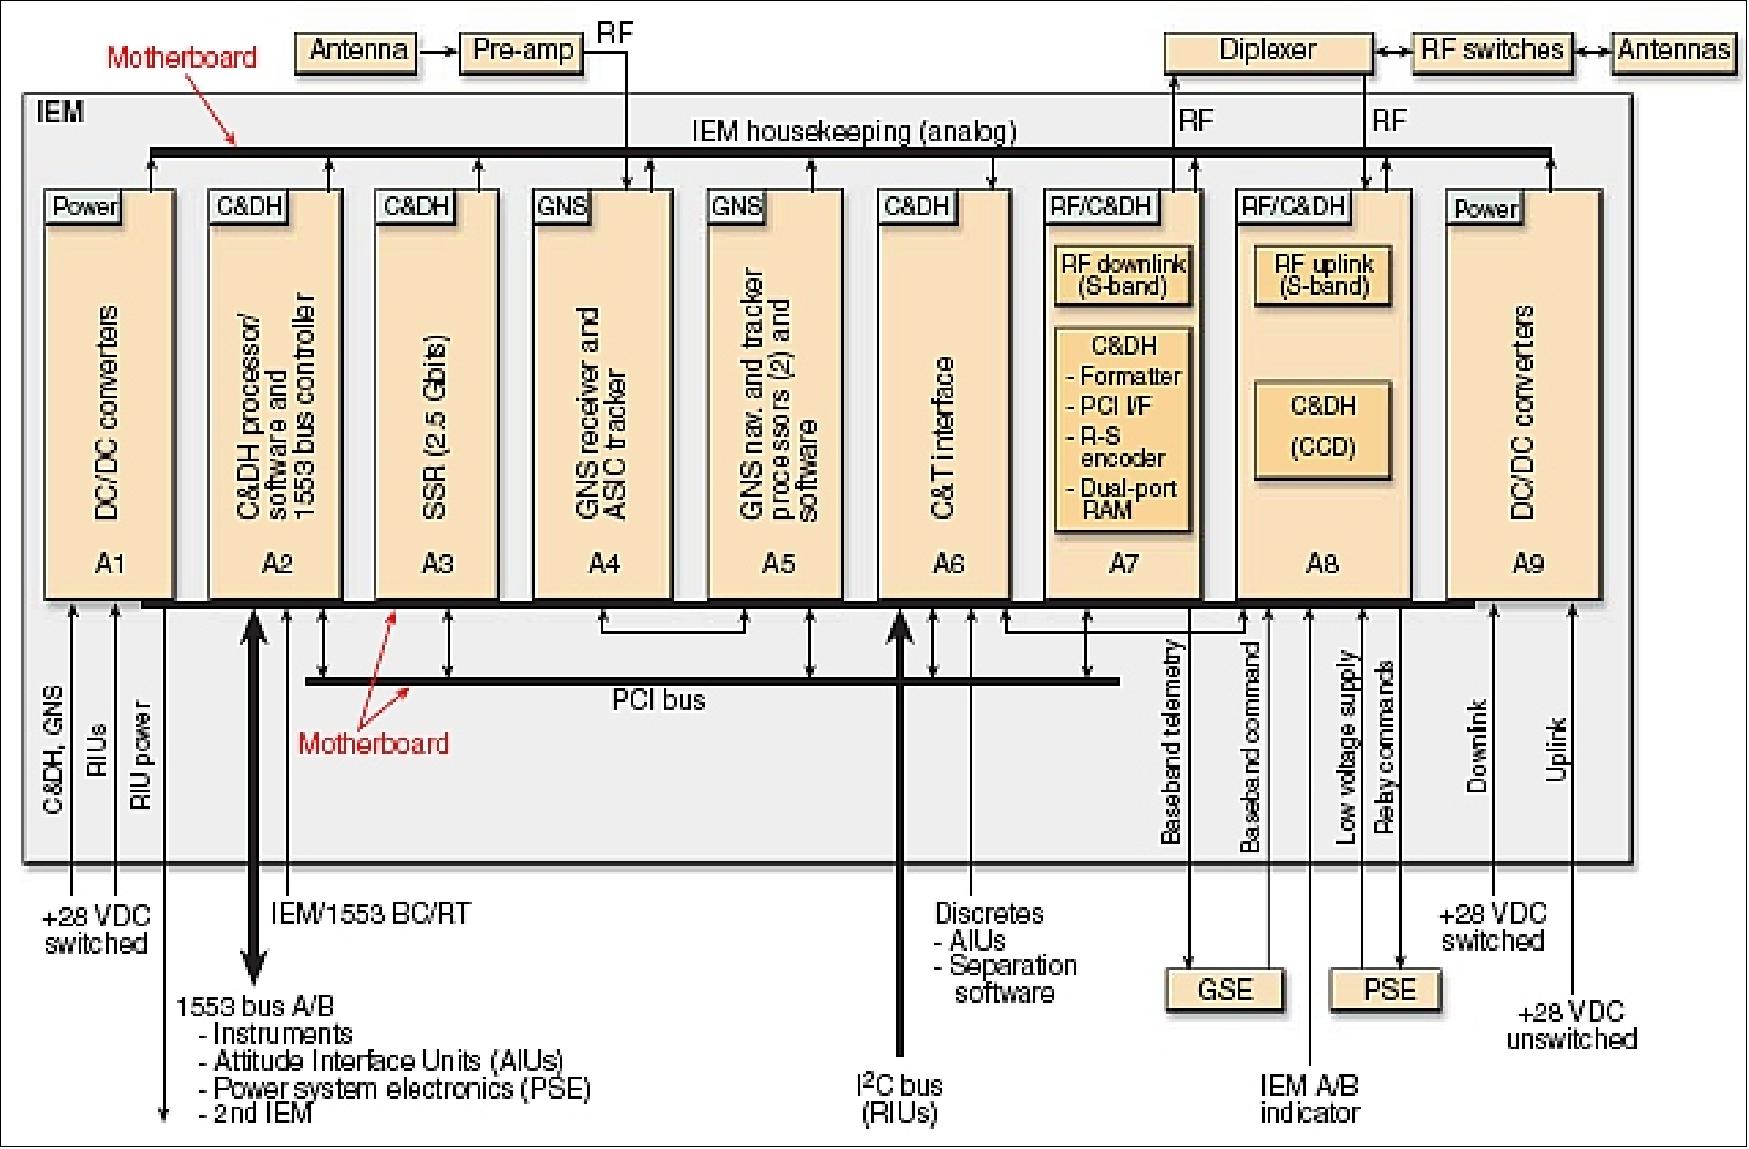 Figure 4: Block diagram of the IEM (Integrated Electronics Module), image credit: JHU/APL)